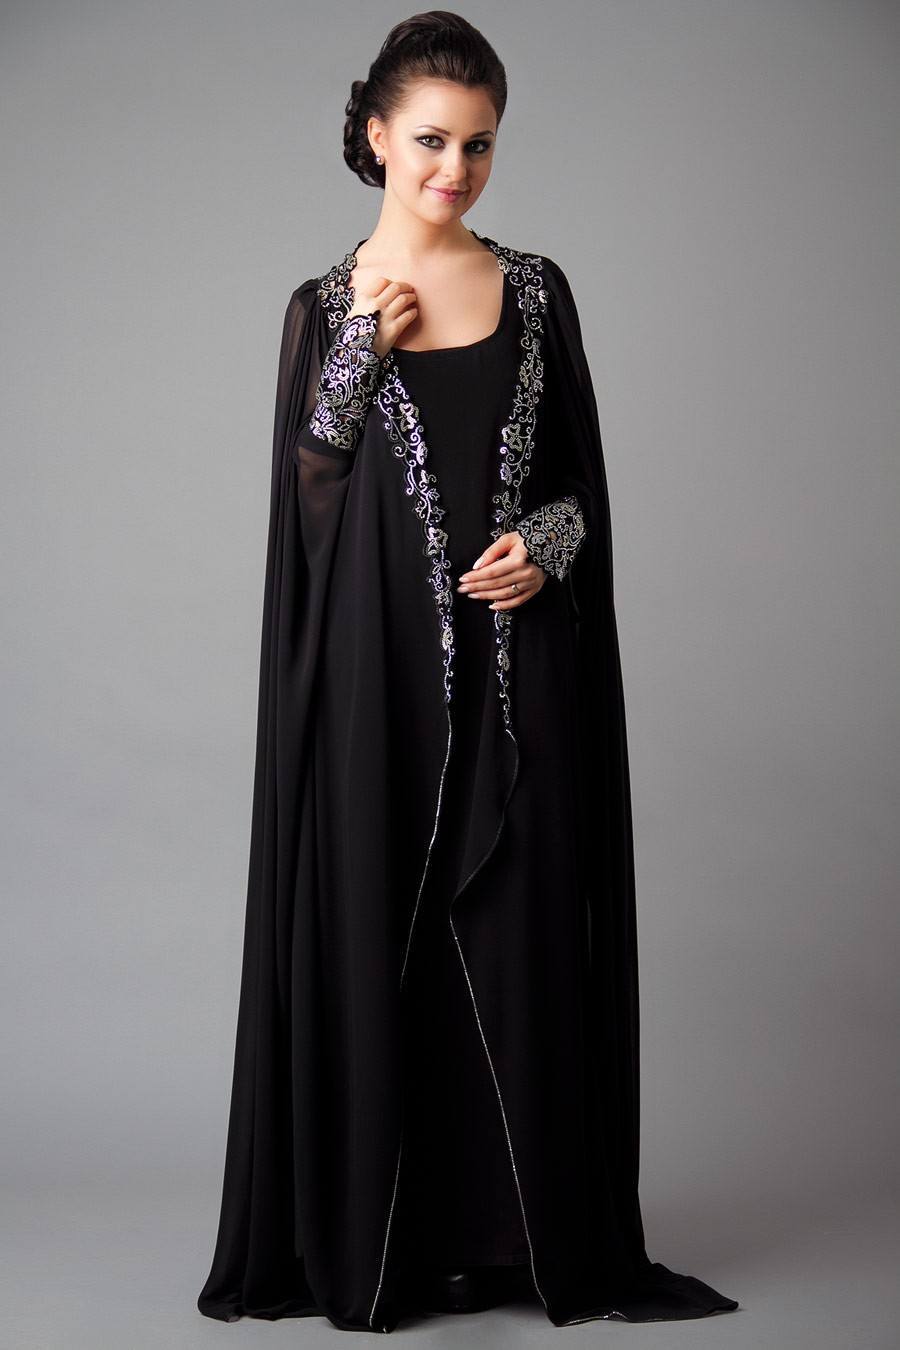 dubai style abayas